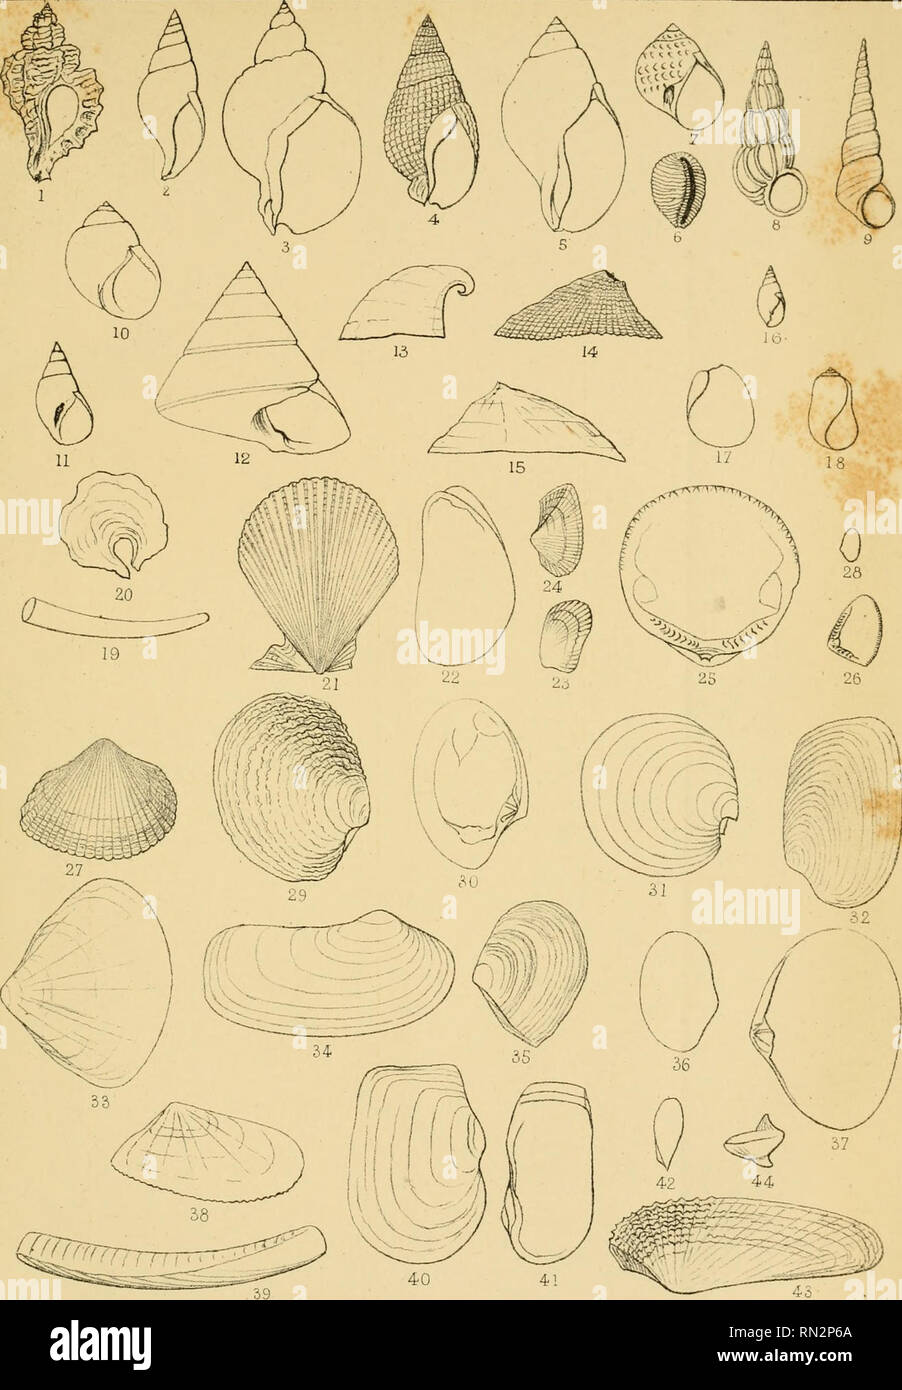 . Annales de la Société royale malacologique de Belgique. Mollusks; Zoology. AiviaZes de la S^Boz/ale^ Mcdacotoçiqice- de. Bdji^uqxx£^. Tom£, XVI a88-!) Pl.V. P Pidsenter. cuv. nat uivu Goii^ereyns.Bnixellci. Please note that these images are extracted from scanned page images that may have been digitally enhanced for readability - coloration and appearance of these illustrations may not perfectly resemble the original work.. Société royale malacologique de Belgique. [S. l. : s. n. ] Stock Photo